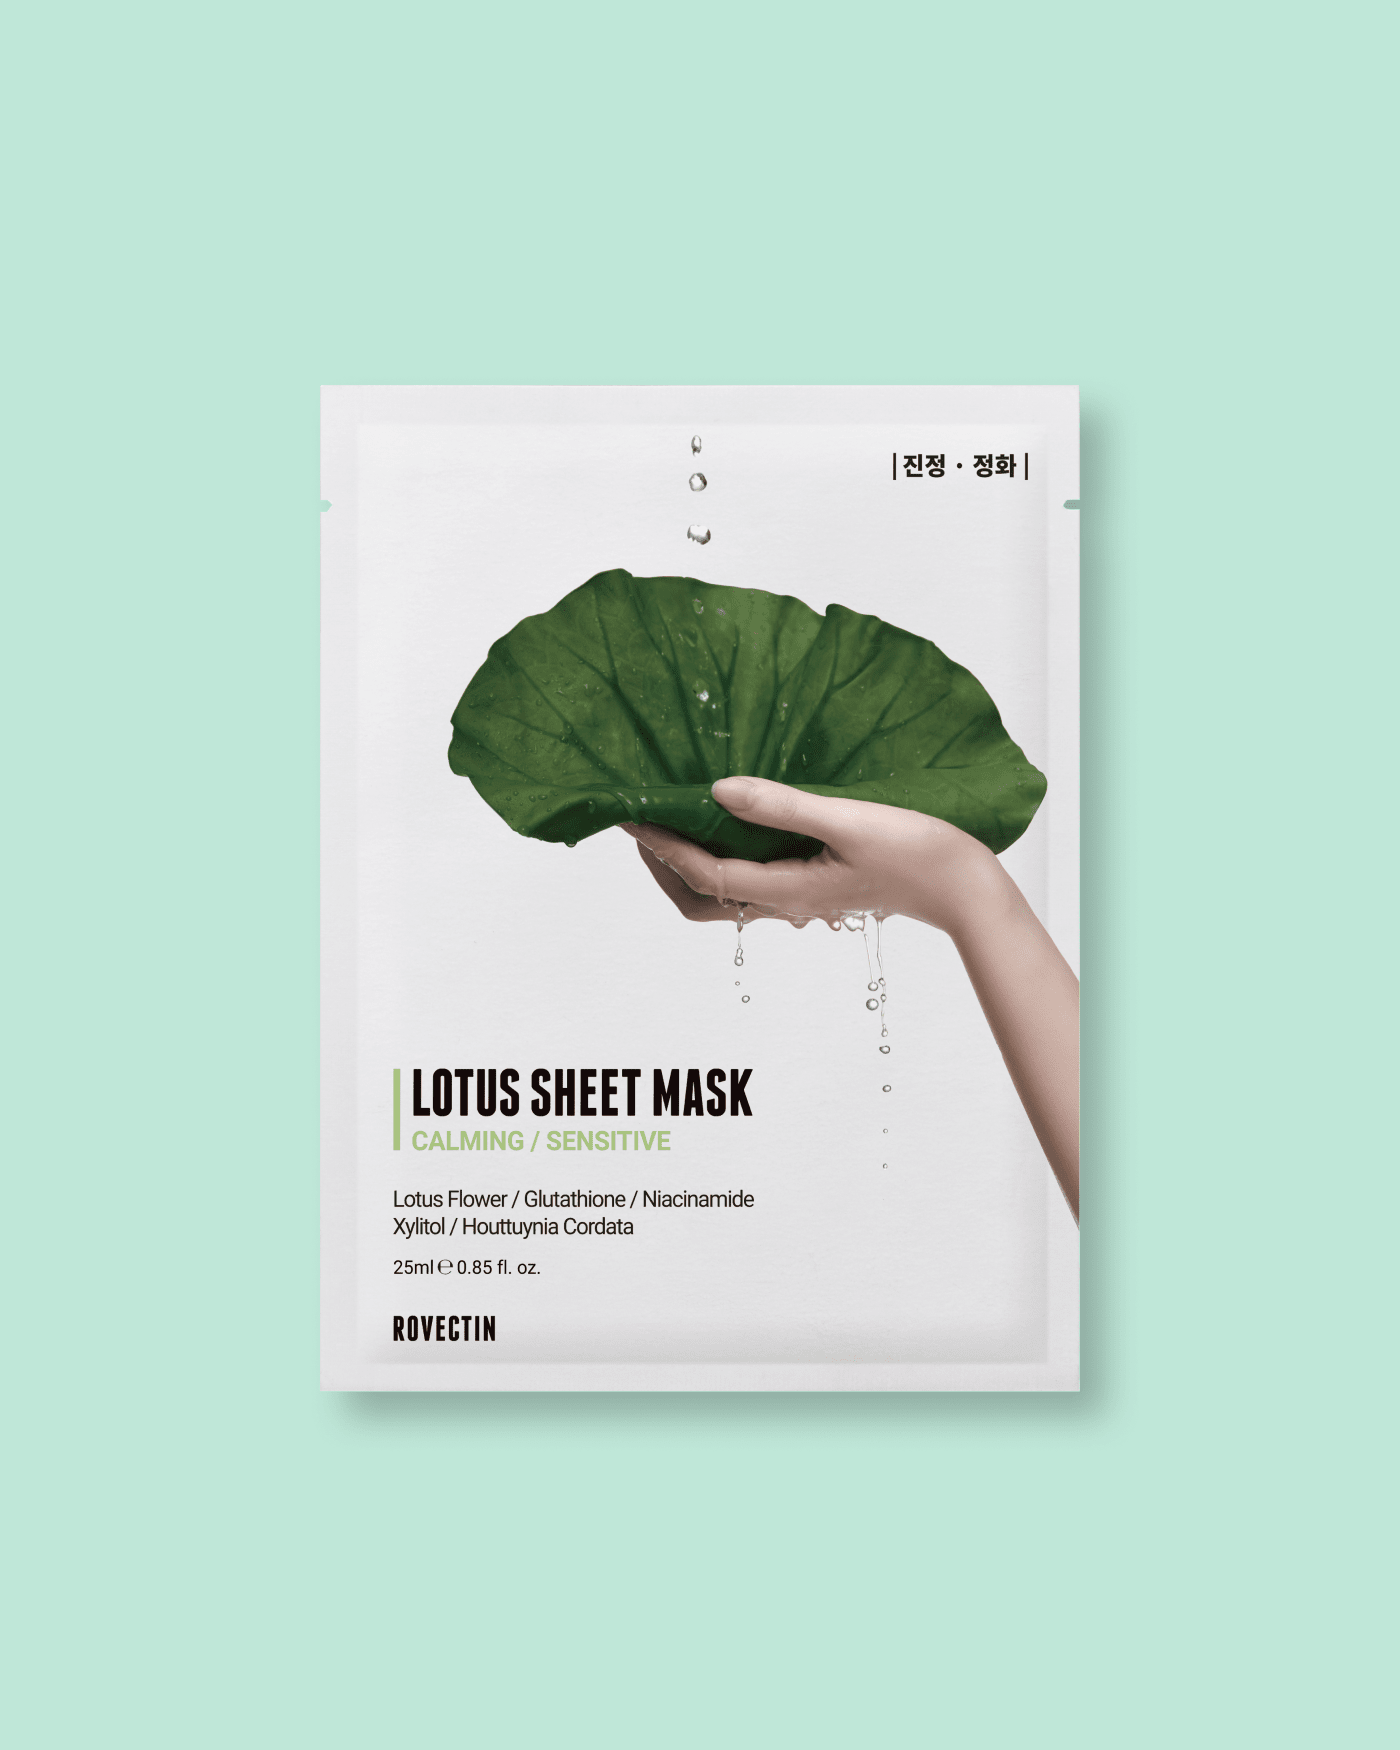 Clean Lotus Water Calming Sheet Mask